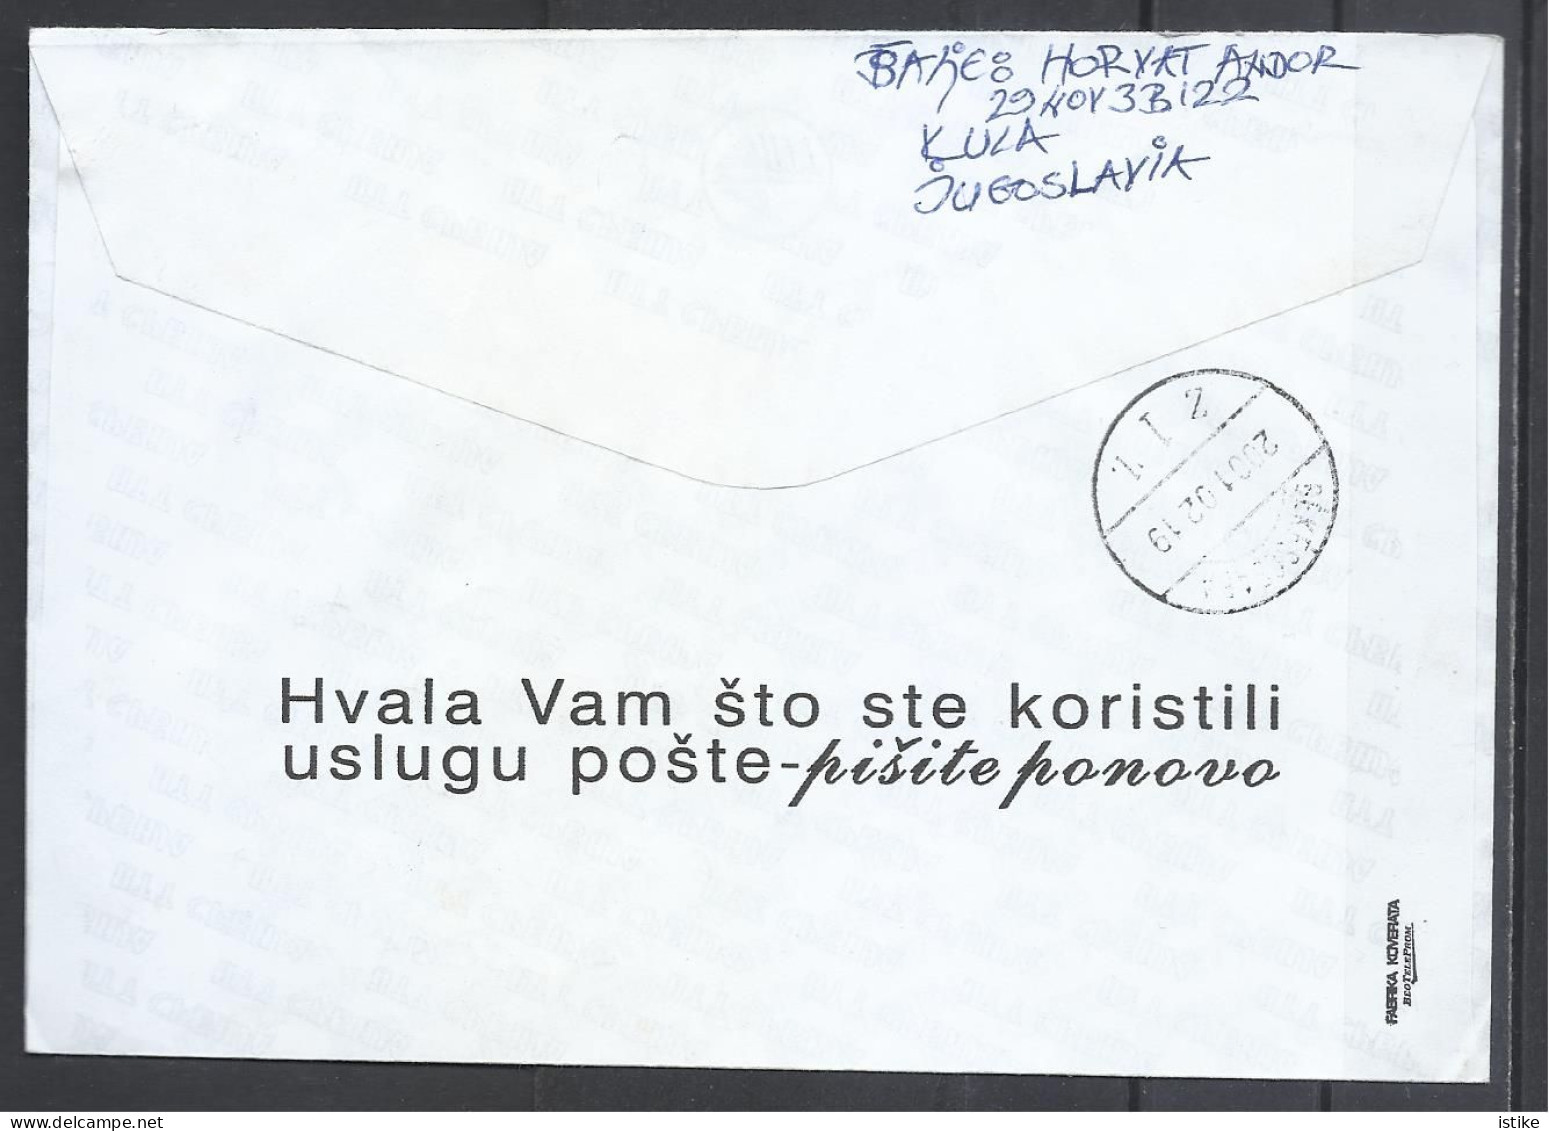 Yugoslavia, Serbia, Mitrovita Post Office Building Cover, Meter Canc. Upside Down  2001. - Storia Postale